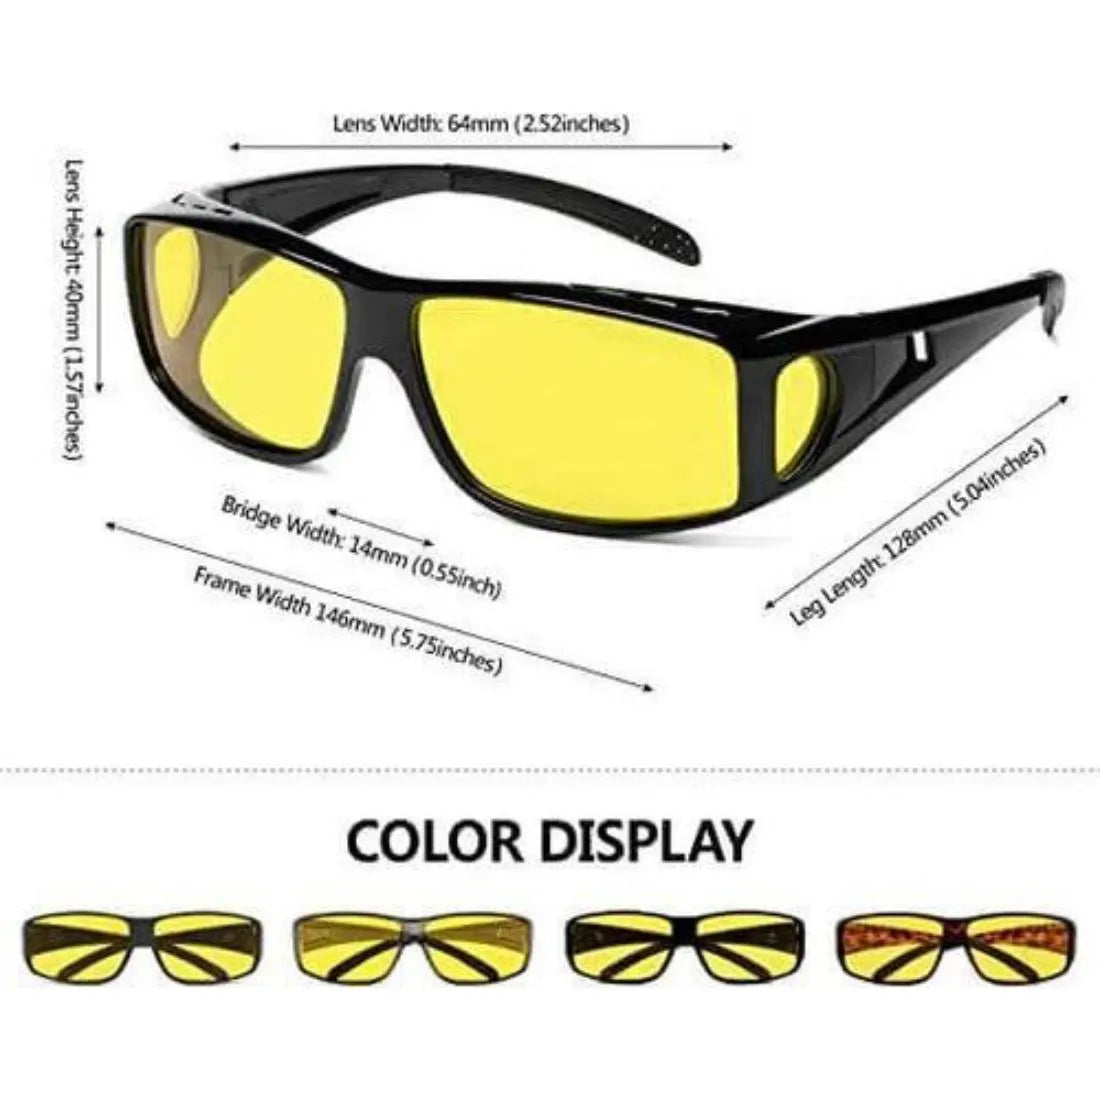 Enhance Night Driving with Dreamzhub Night Vision Glasses | Reduce Glare & Eye Strain